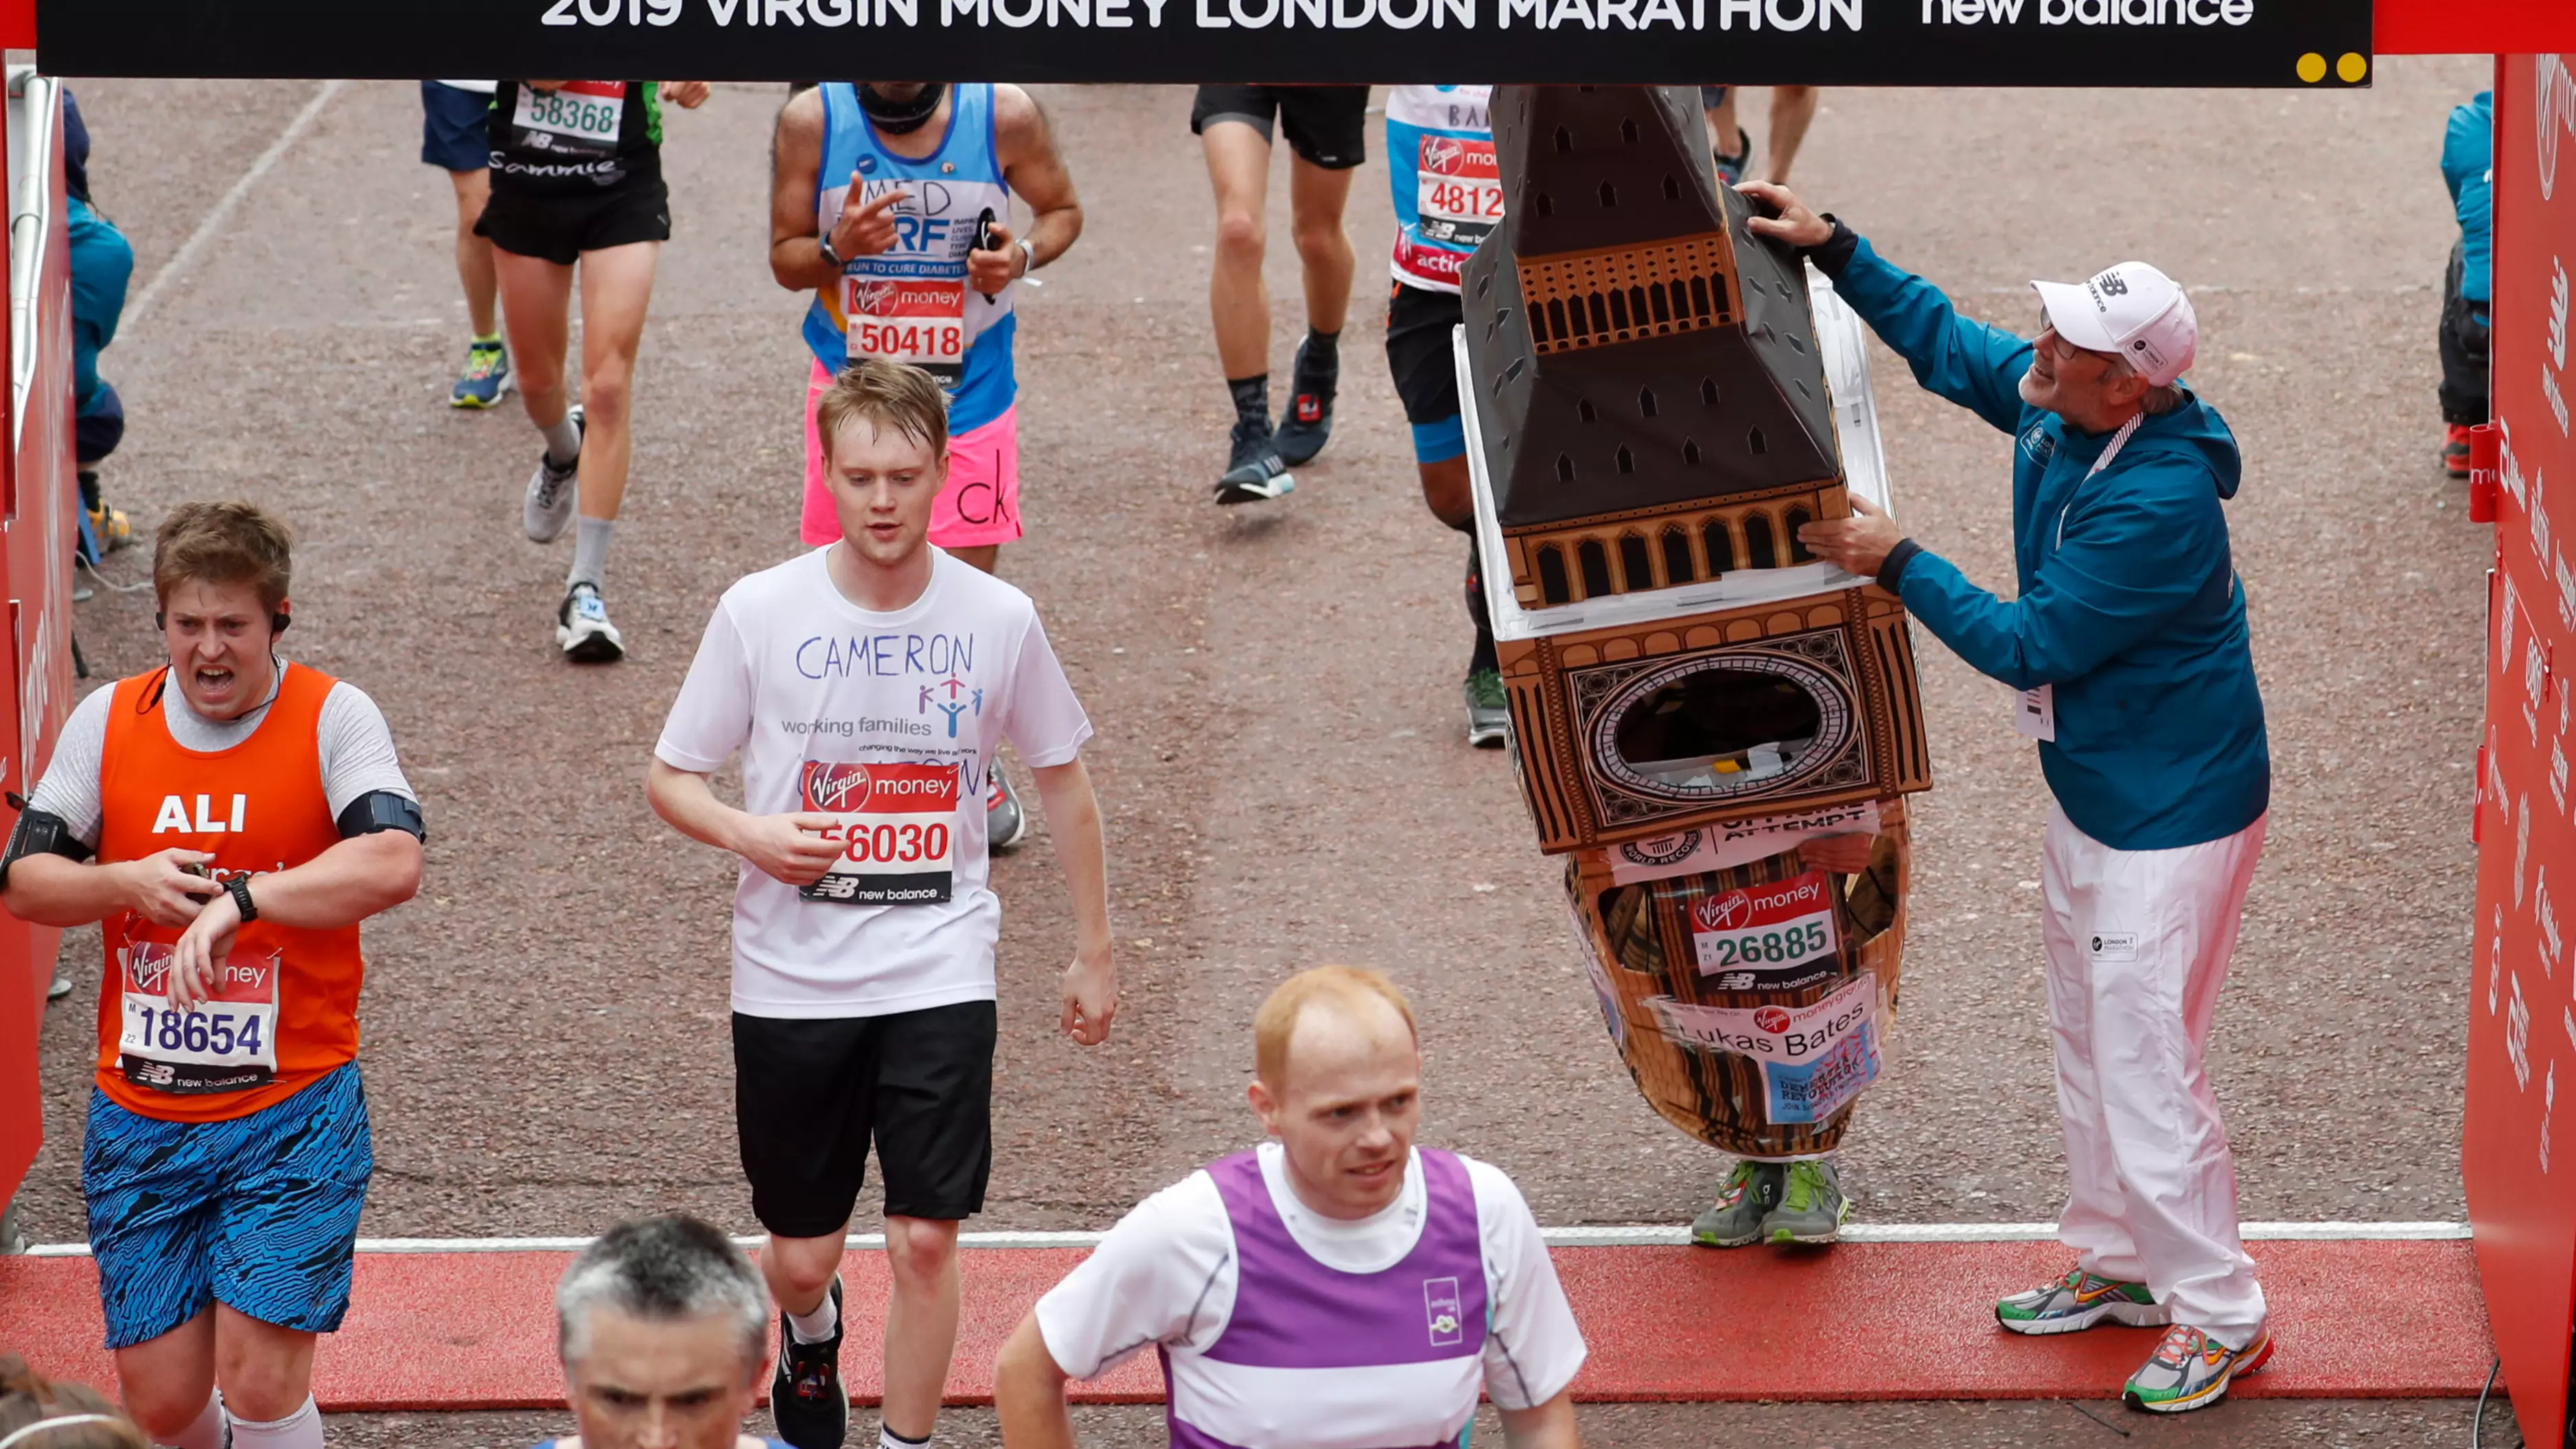 Runner Dressed As Big Ben Gets Stuck During London Marathon 